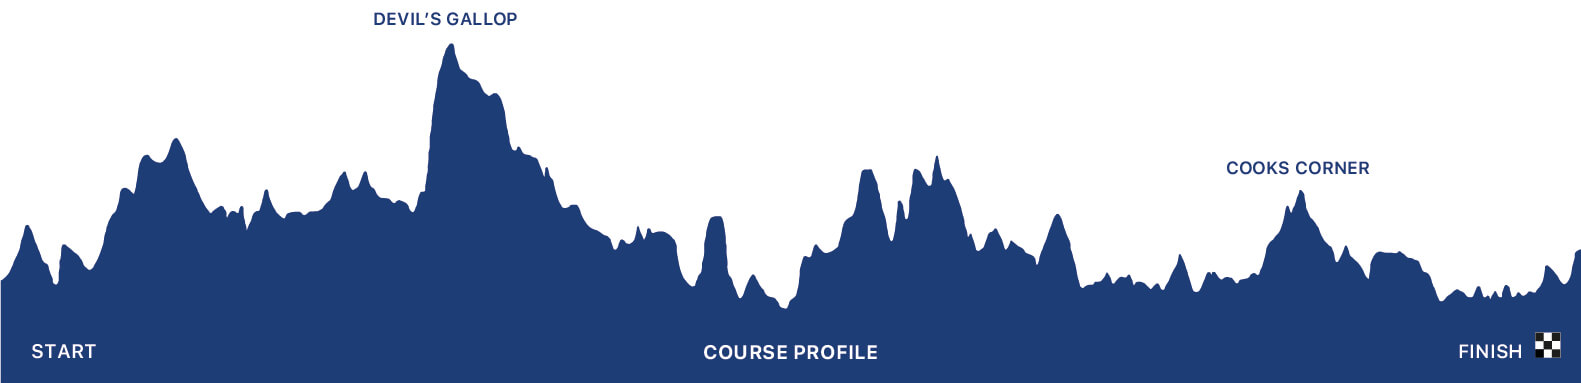 A course profile of the Windermere Marathon route course profile.